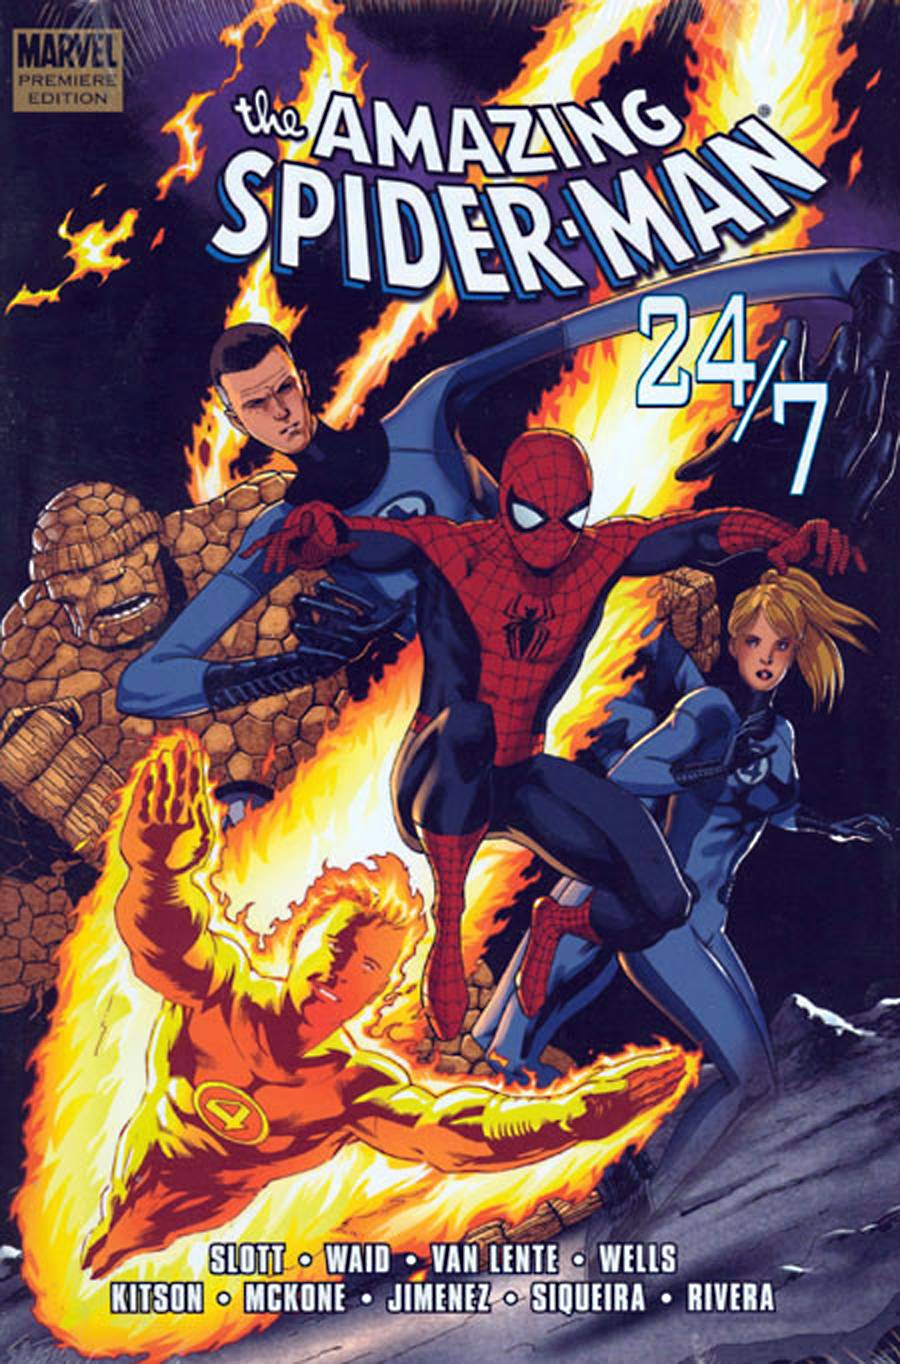 Spider-Man 24-7 Hardcover